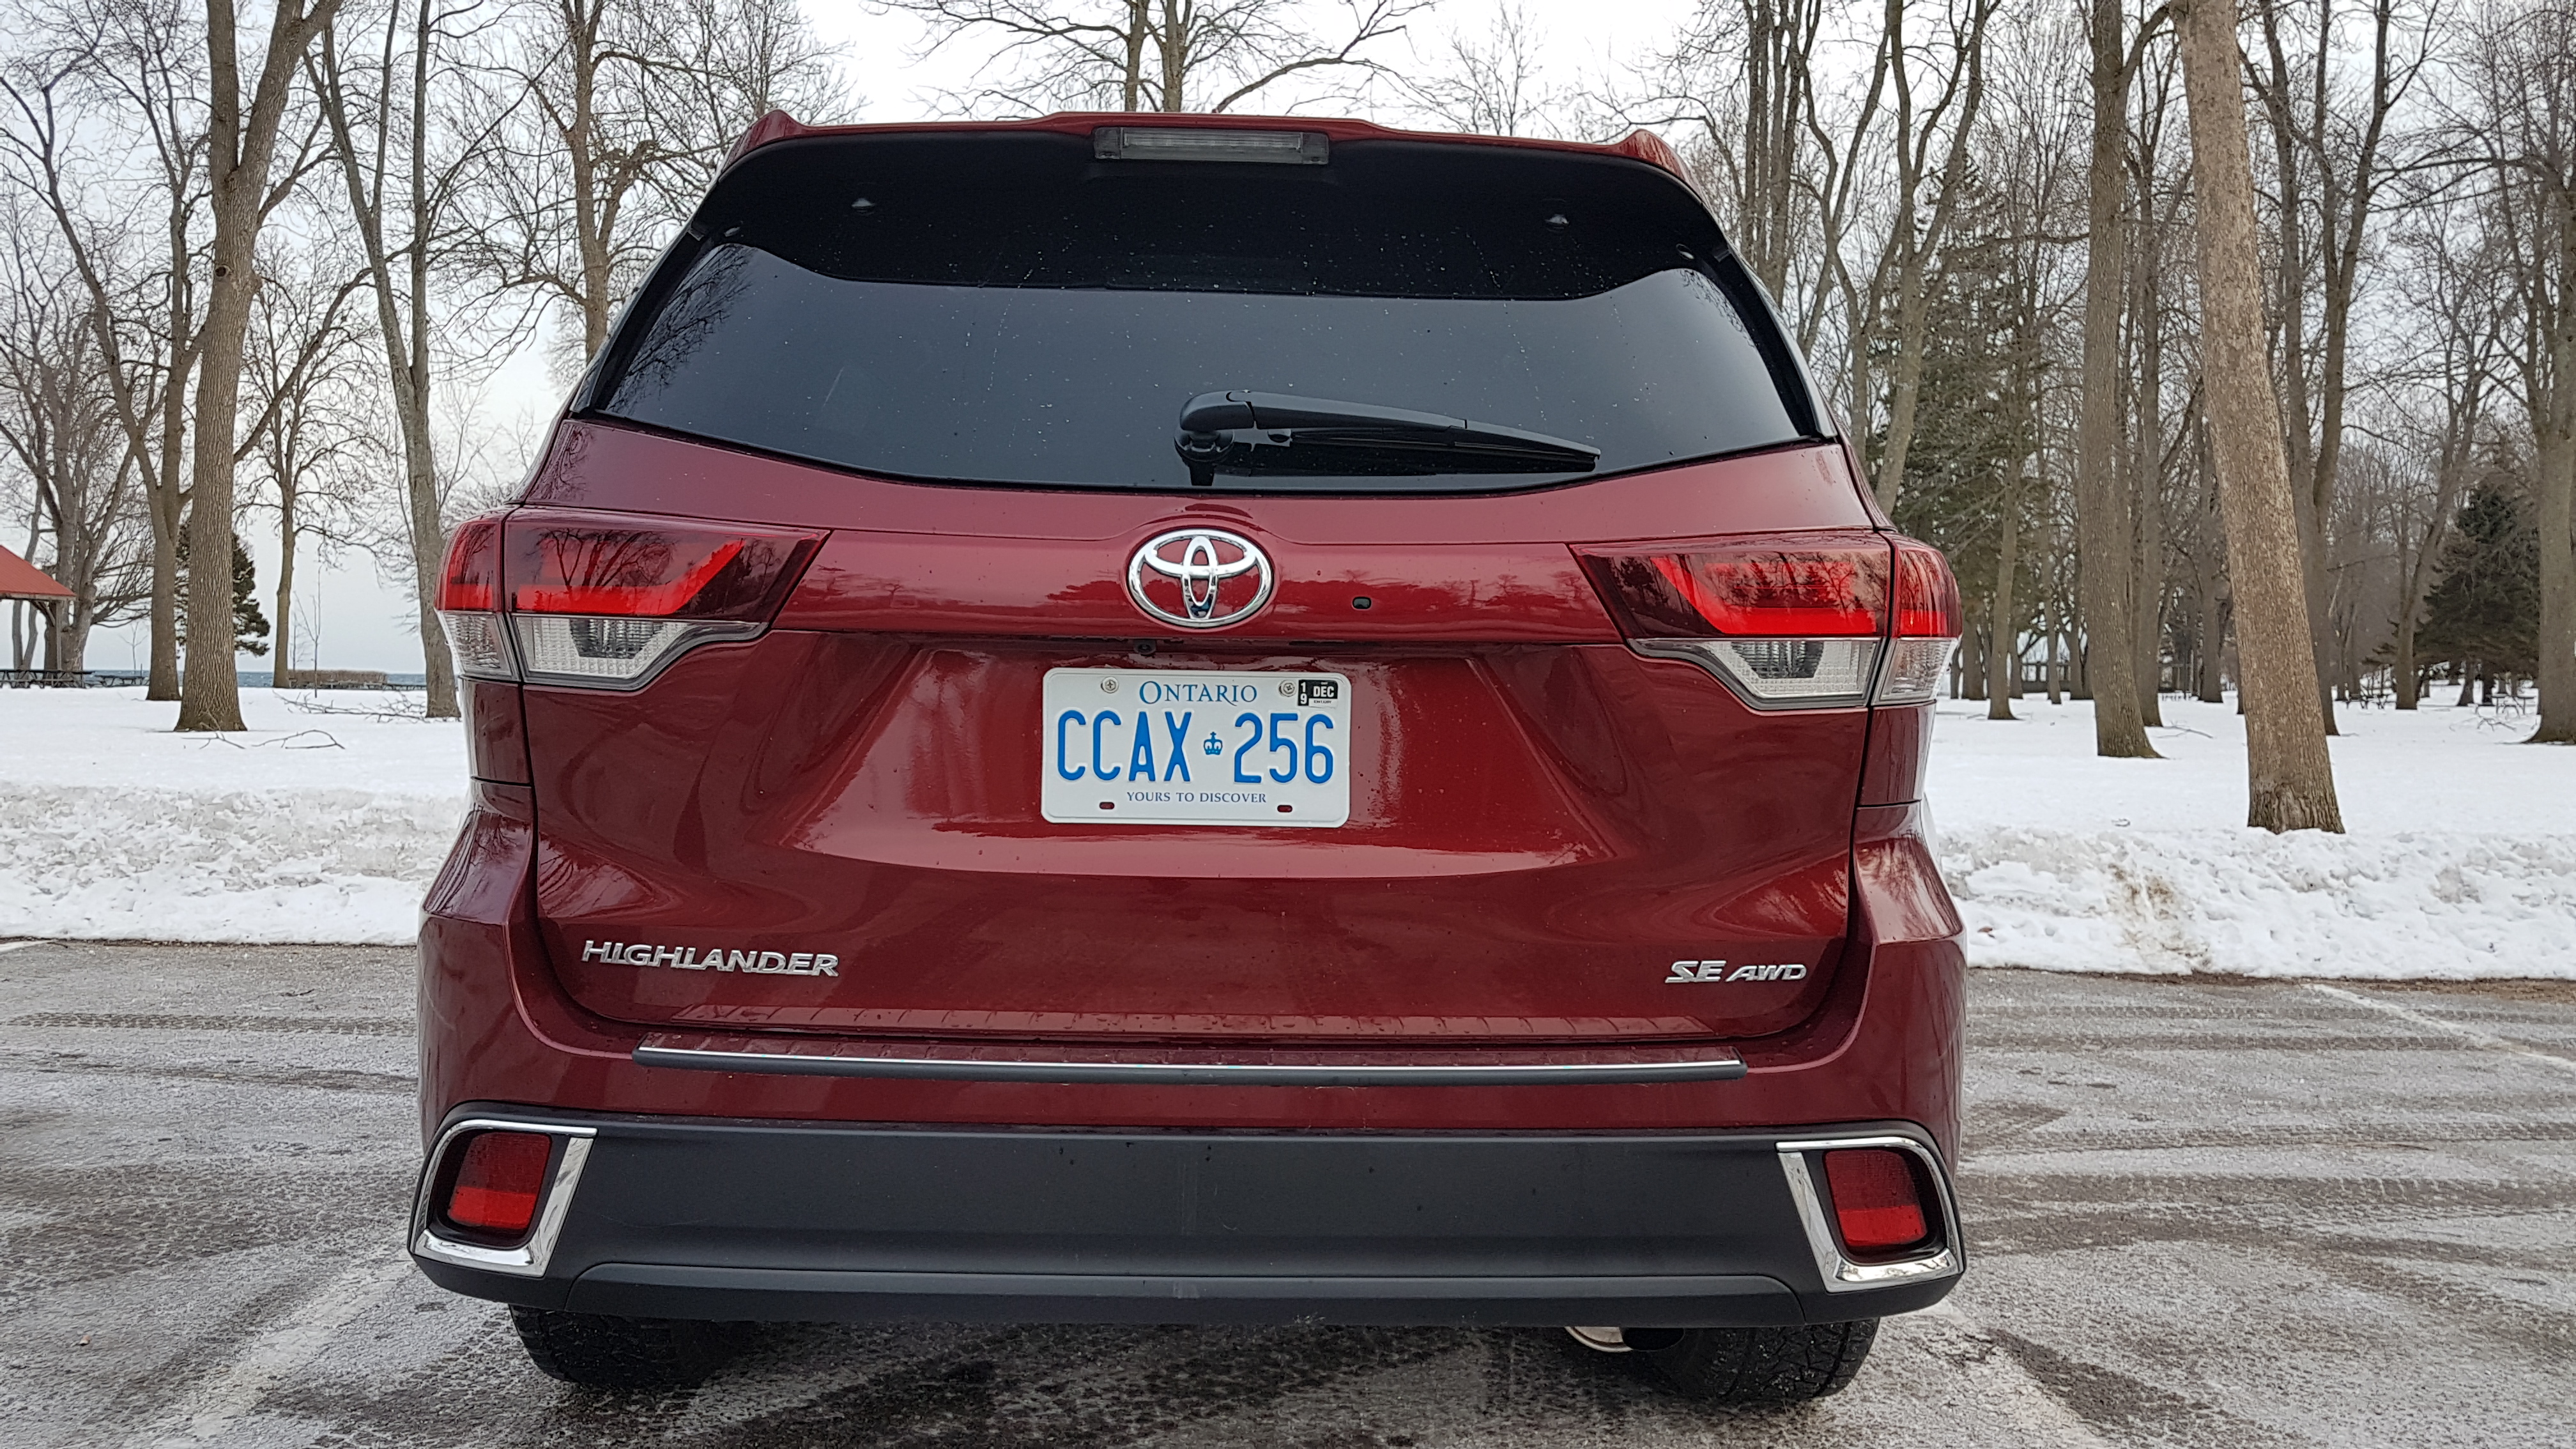 Toyota Highlander exterior 2019